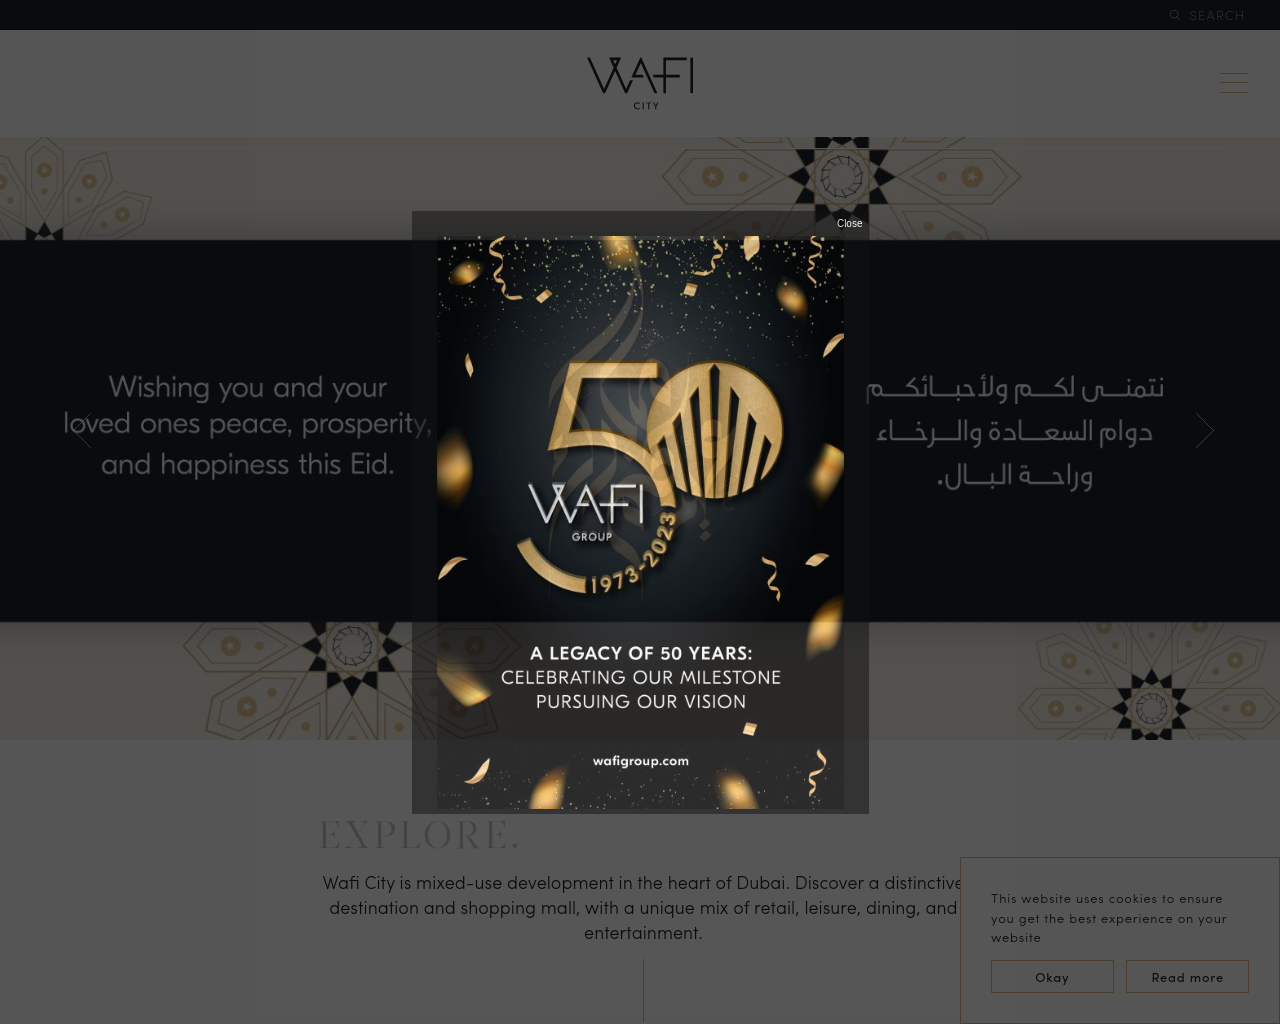 wafi.com